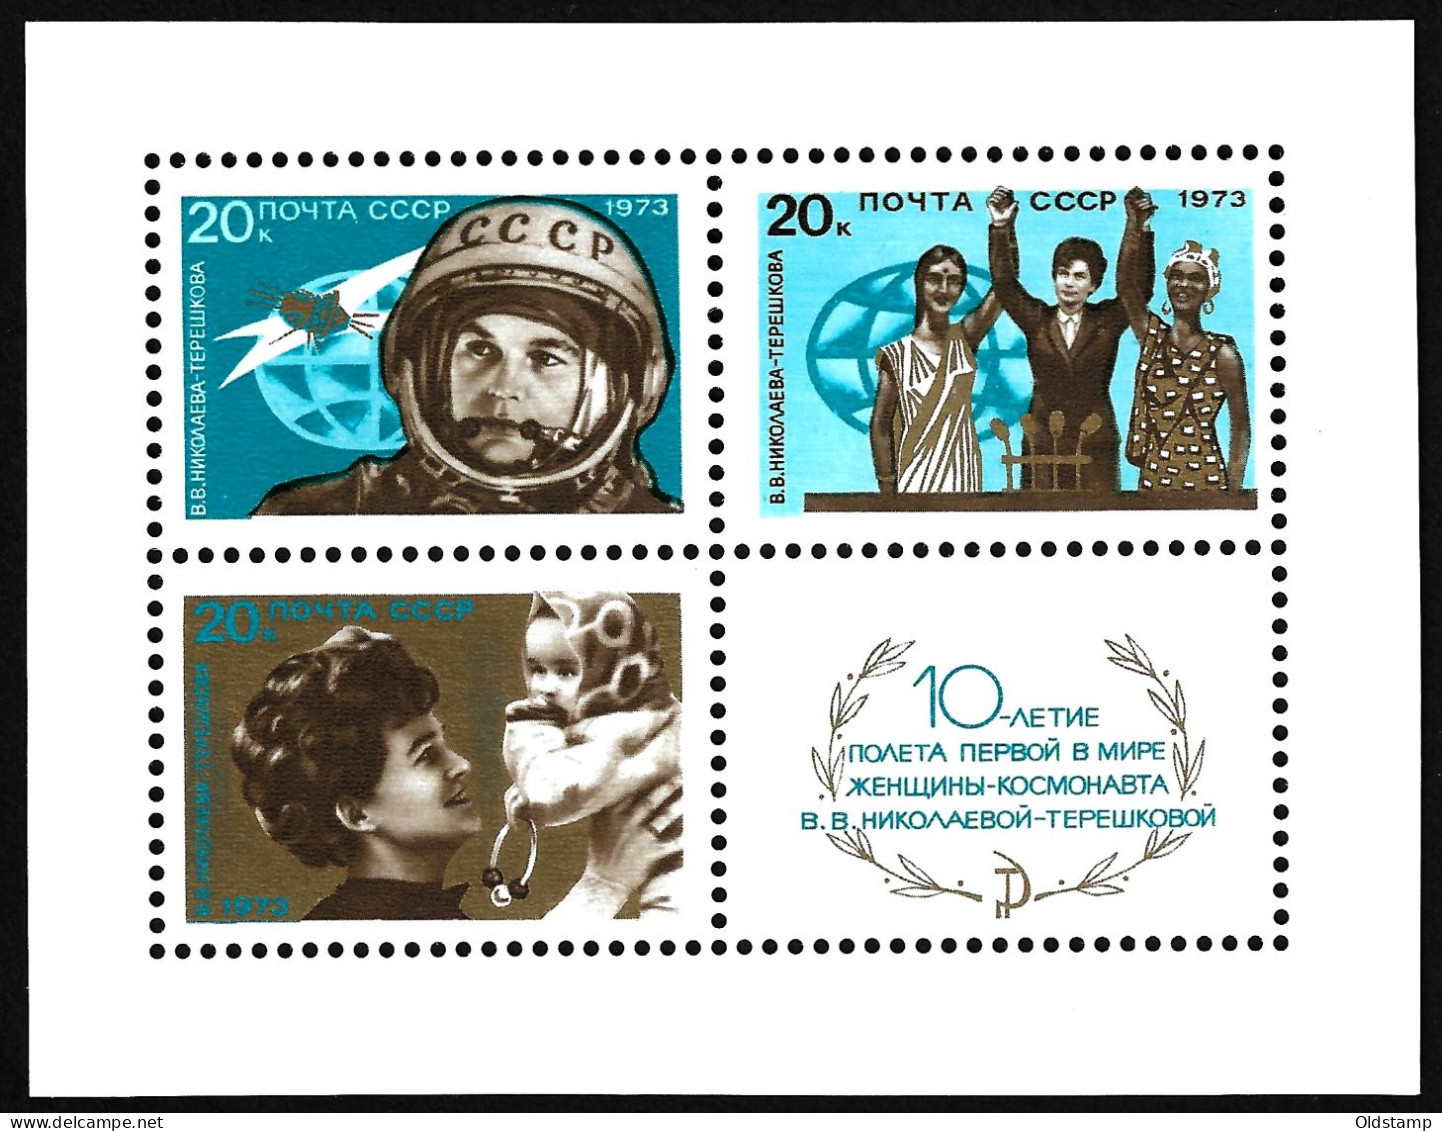 SPACE USSR 1973 MNH GAGARIN Soviet Union 20k. Space Gagarin 10th Flight Tereshkova MNH Stamp Mi. Block # - Sammlungen